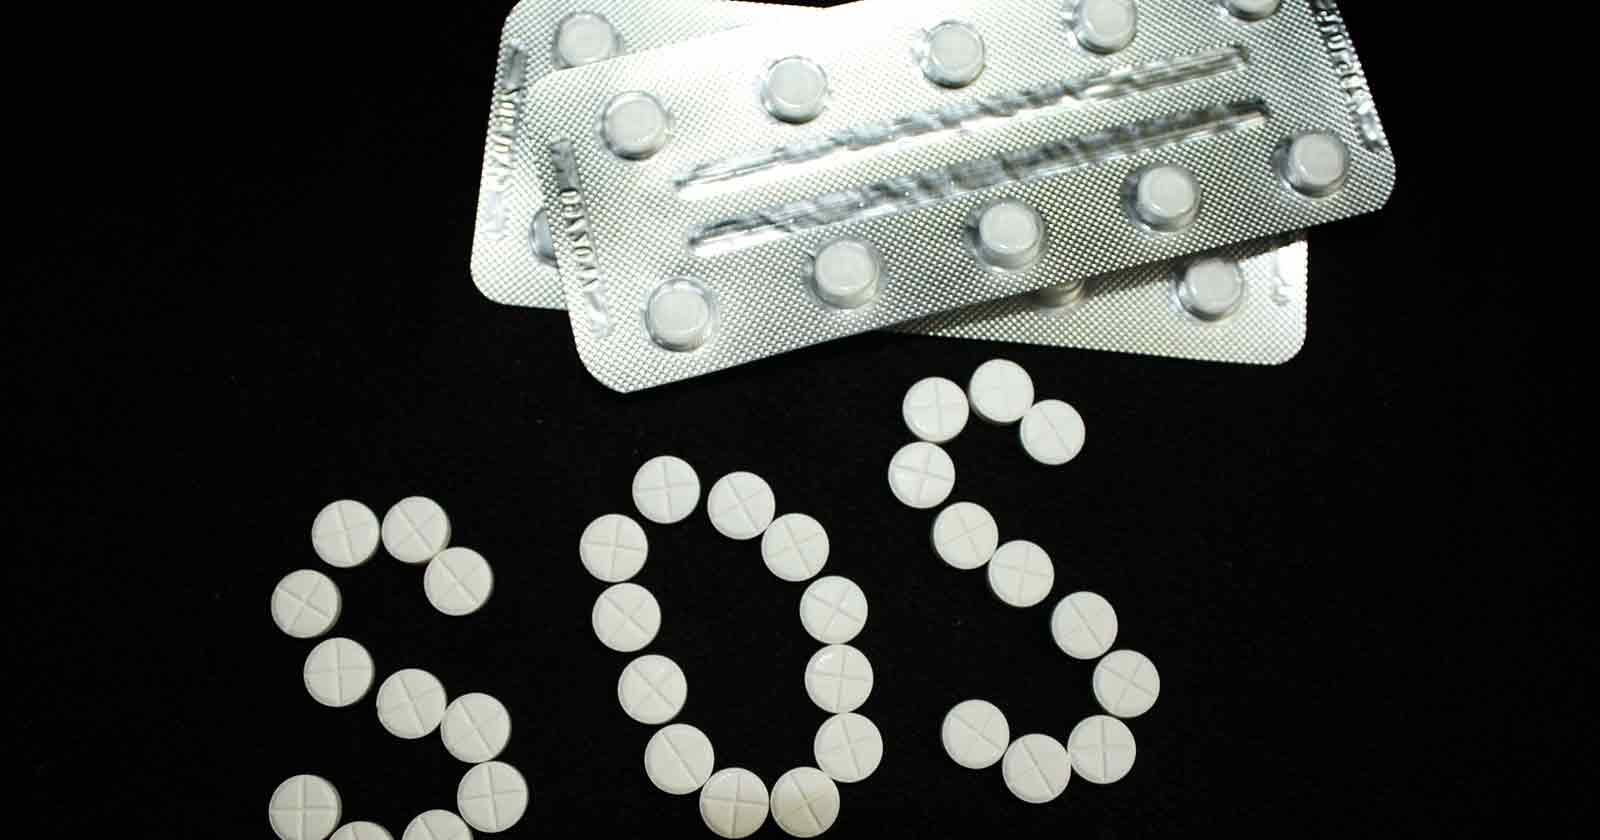 benzodiazepine epidemic looming